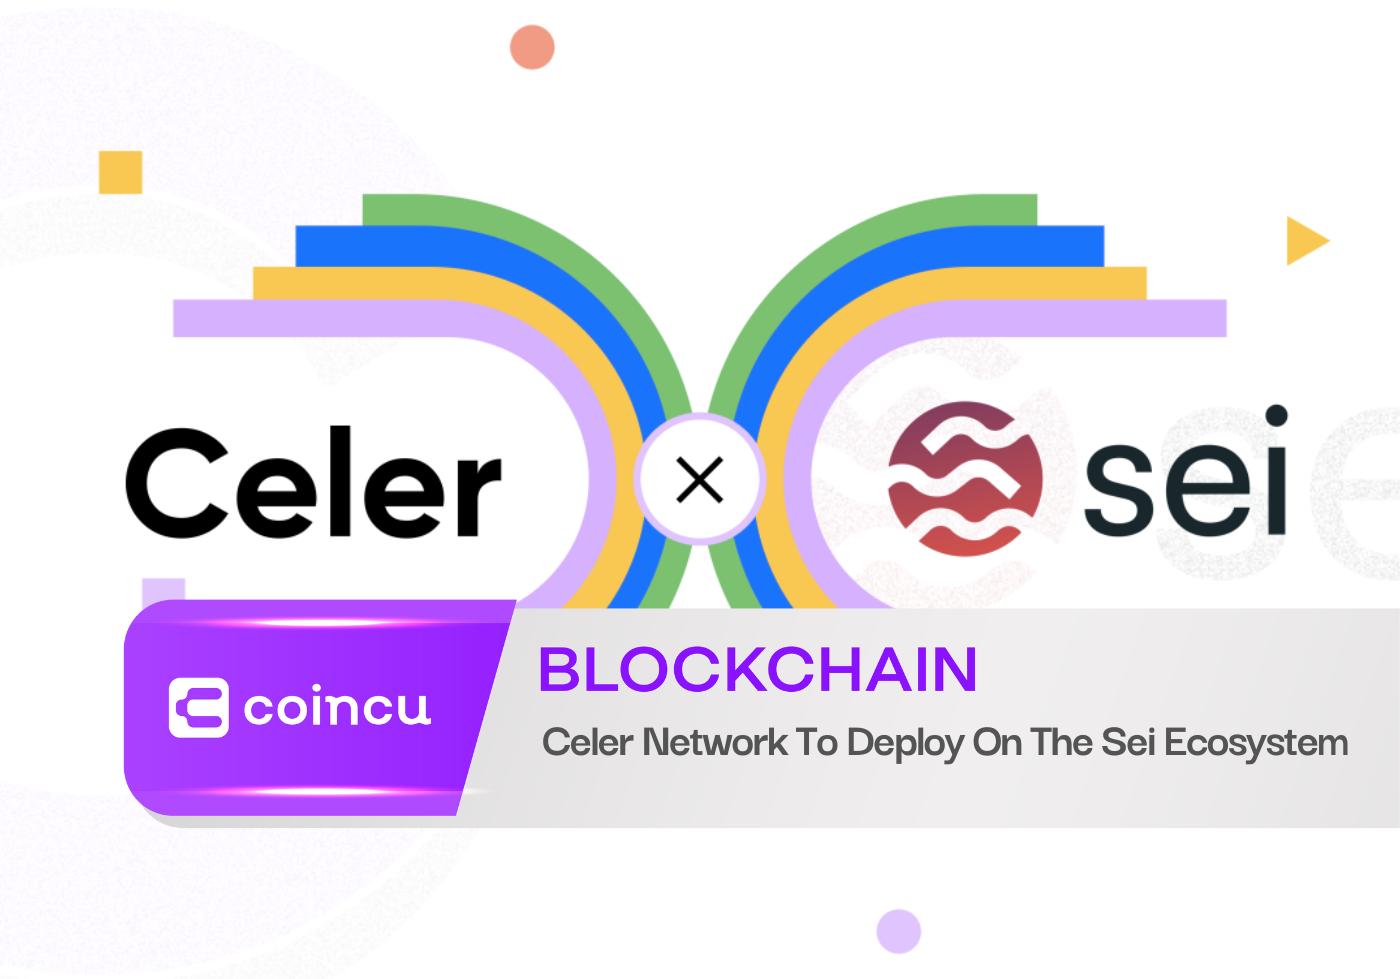 Celer 网络将在 Sei 生态系统上部署